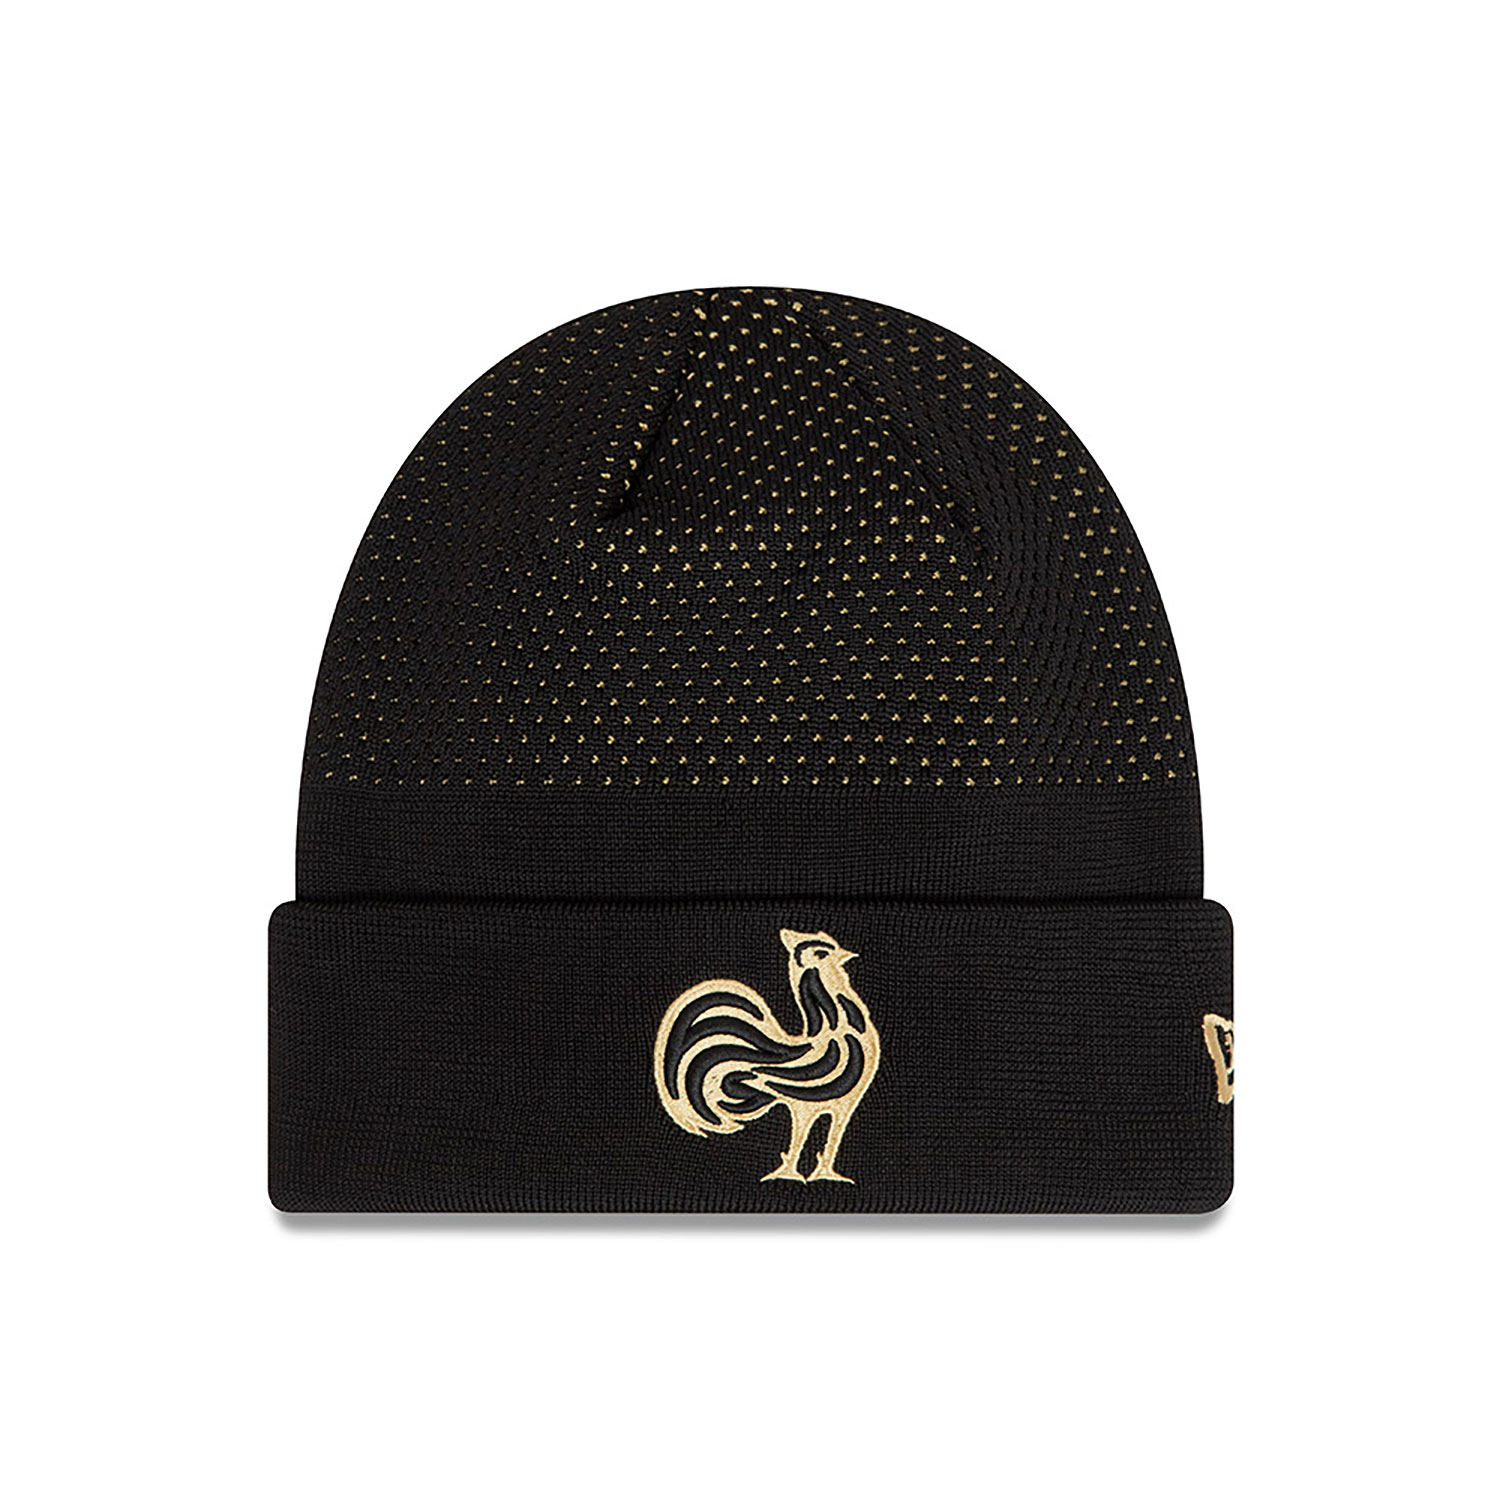 French Federation Of Rugby Wordmark Black Cuff Knit Beanie Hat